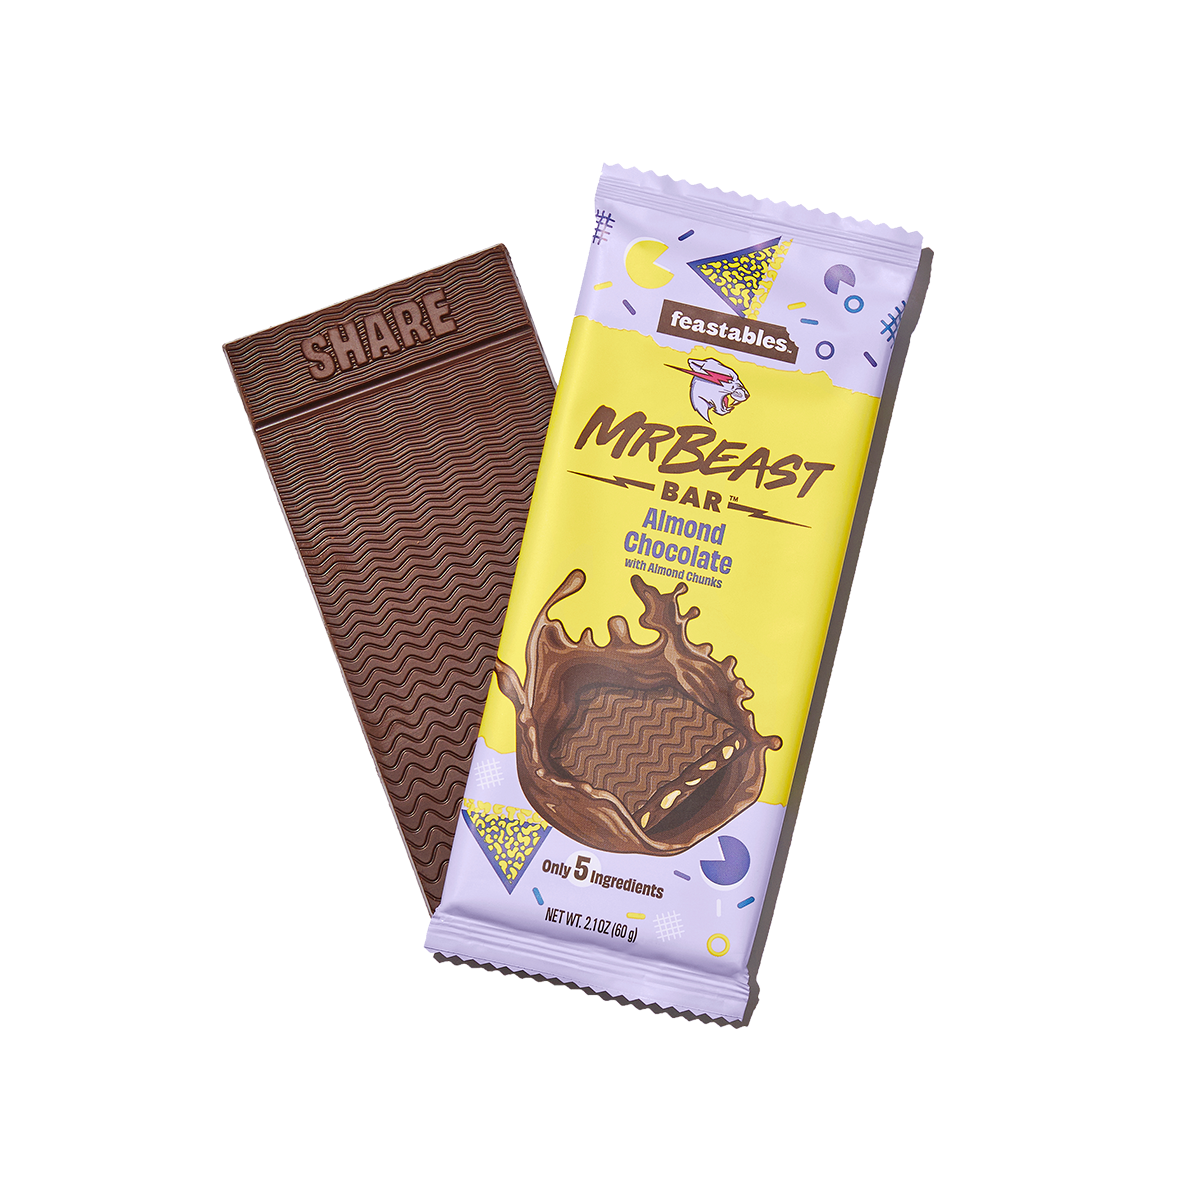 Mr. Beast Feastables Almond Chocolate Bar 60g - Box of 10